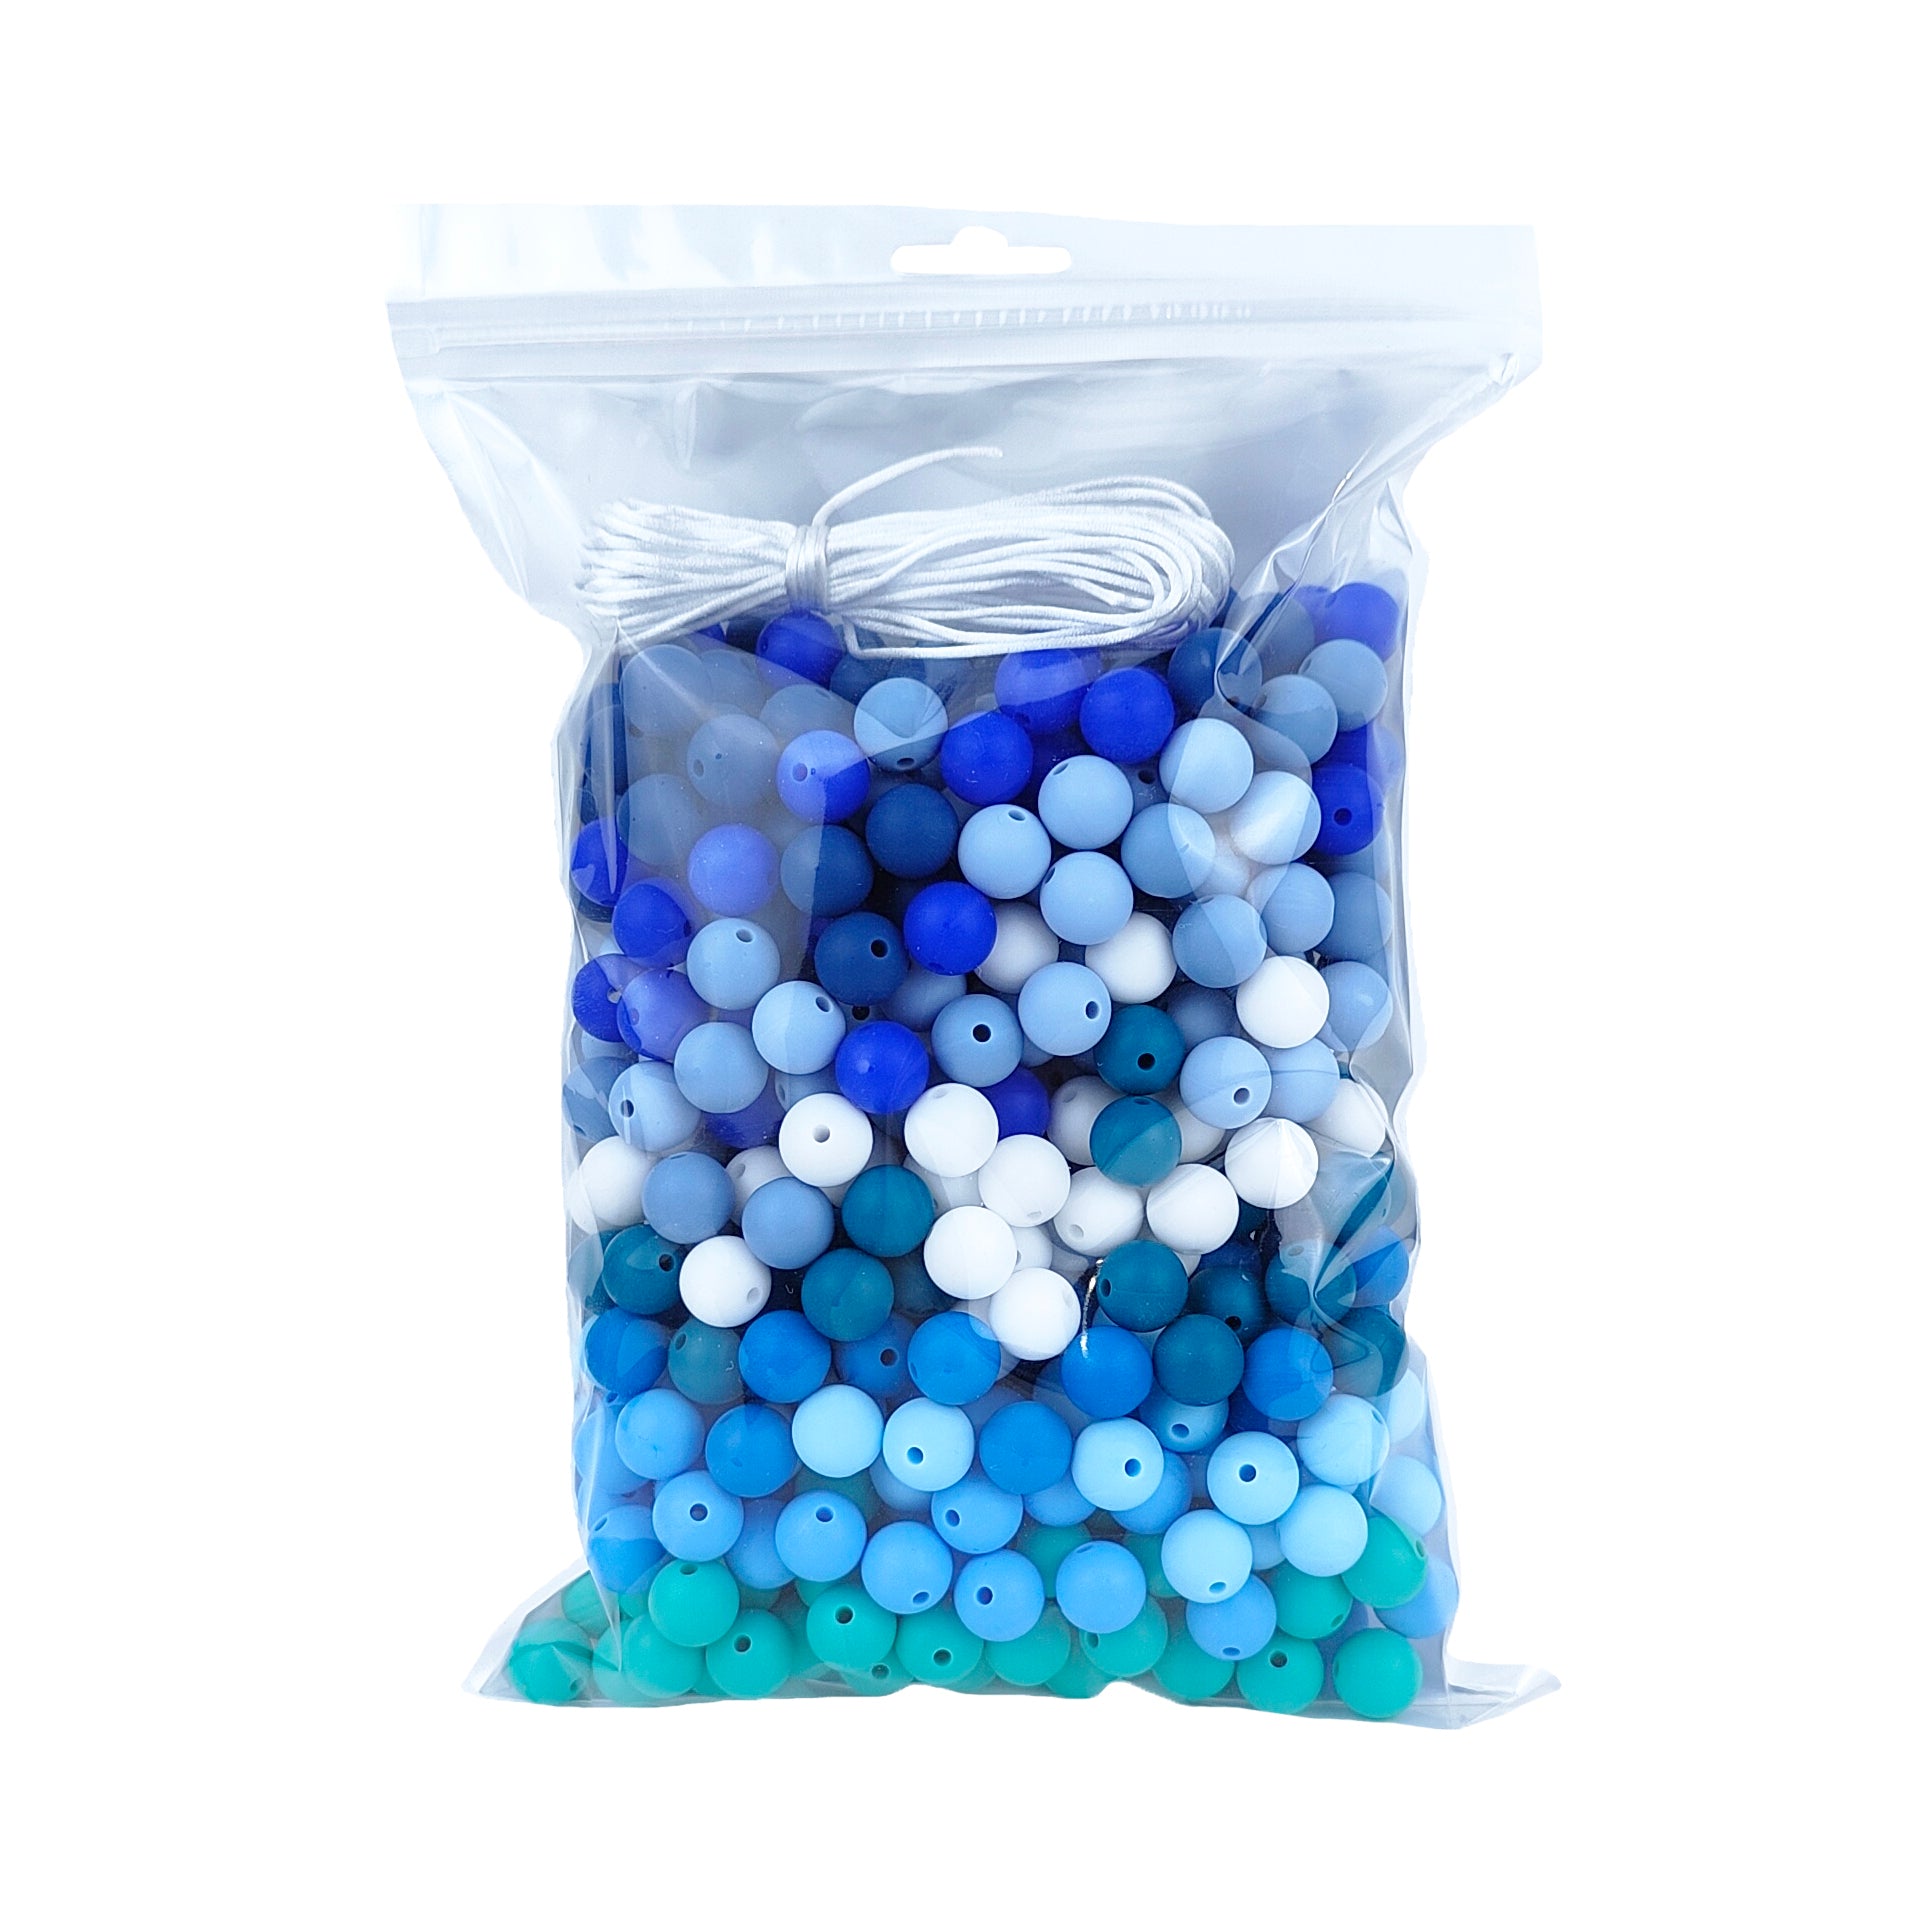 Silicone focal beads wholesale suppliers - Mrbite - Medium